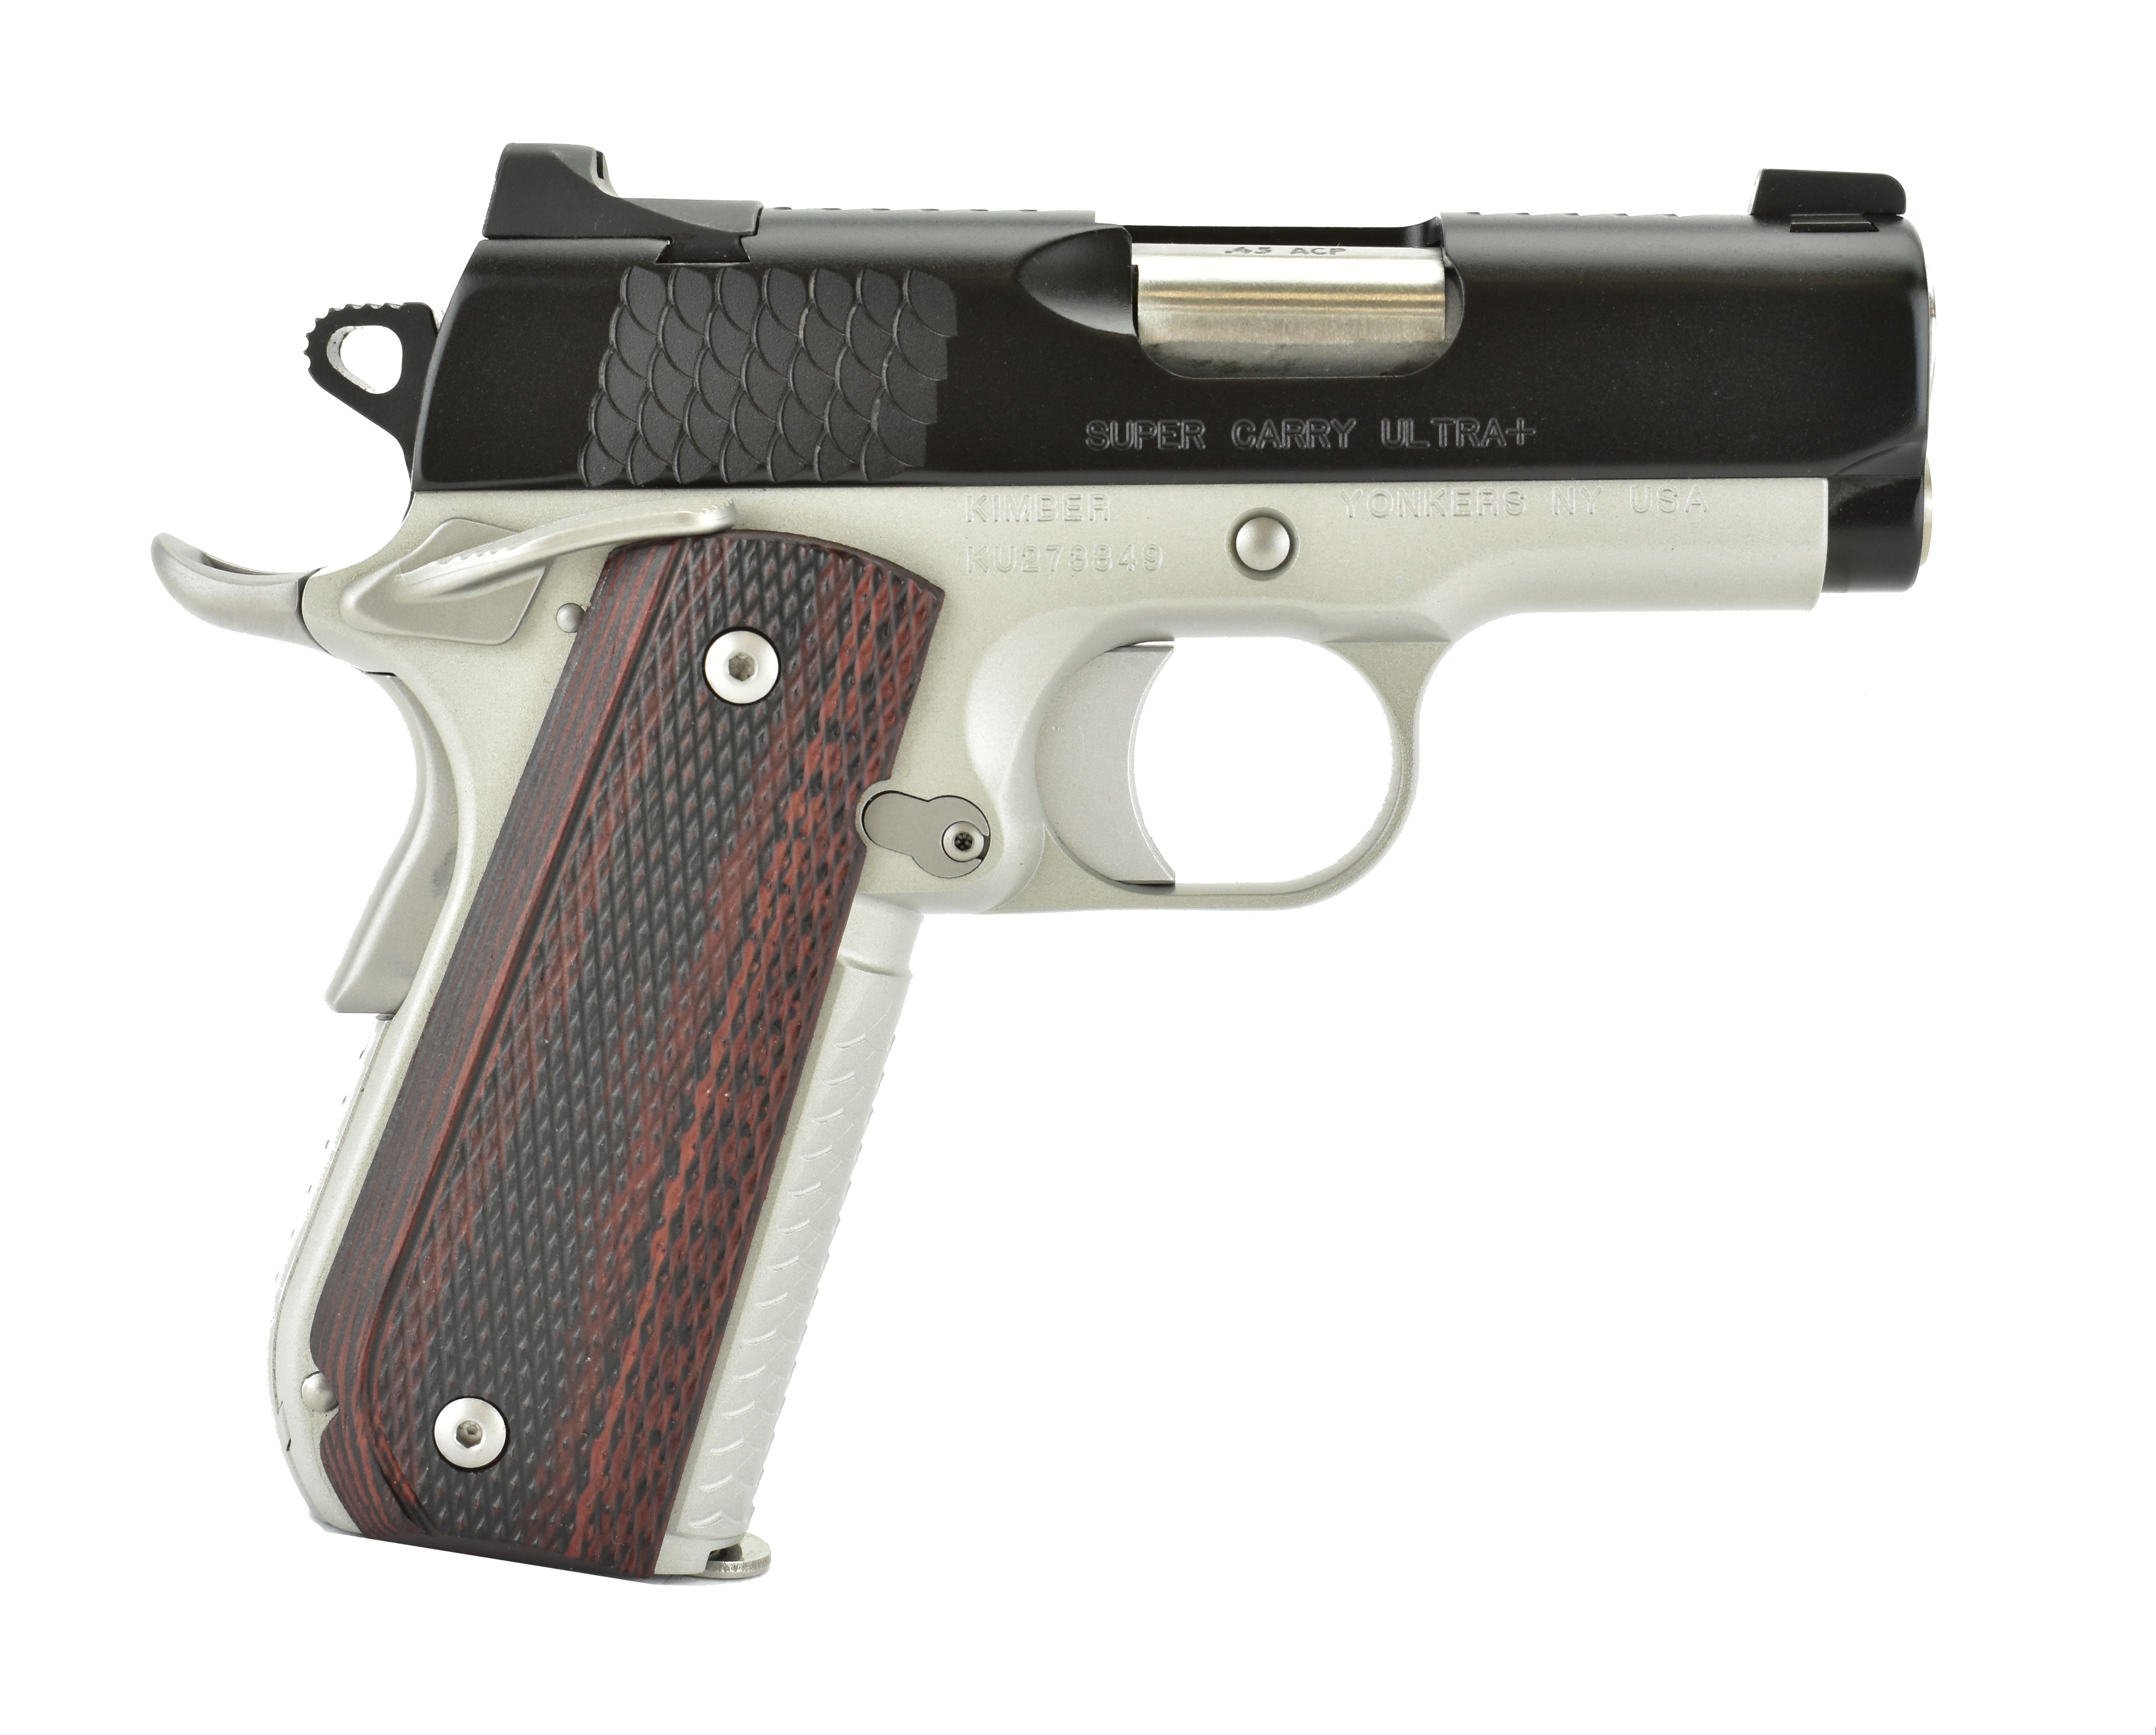 Kimber Super Carry Ultra+ .45 ACP caliber pistol for sale. New.